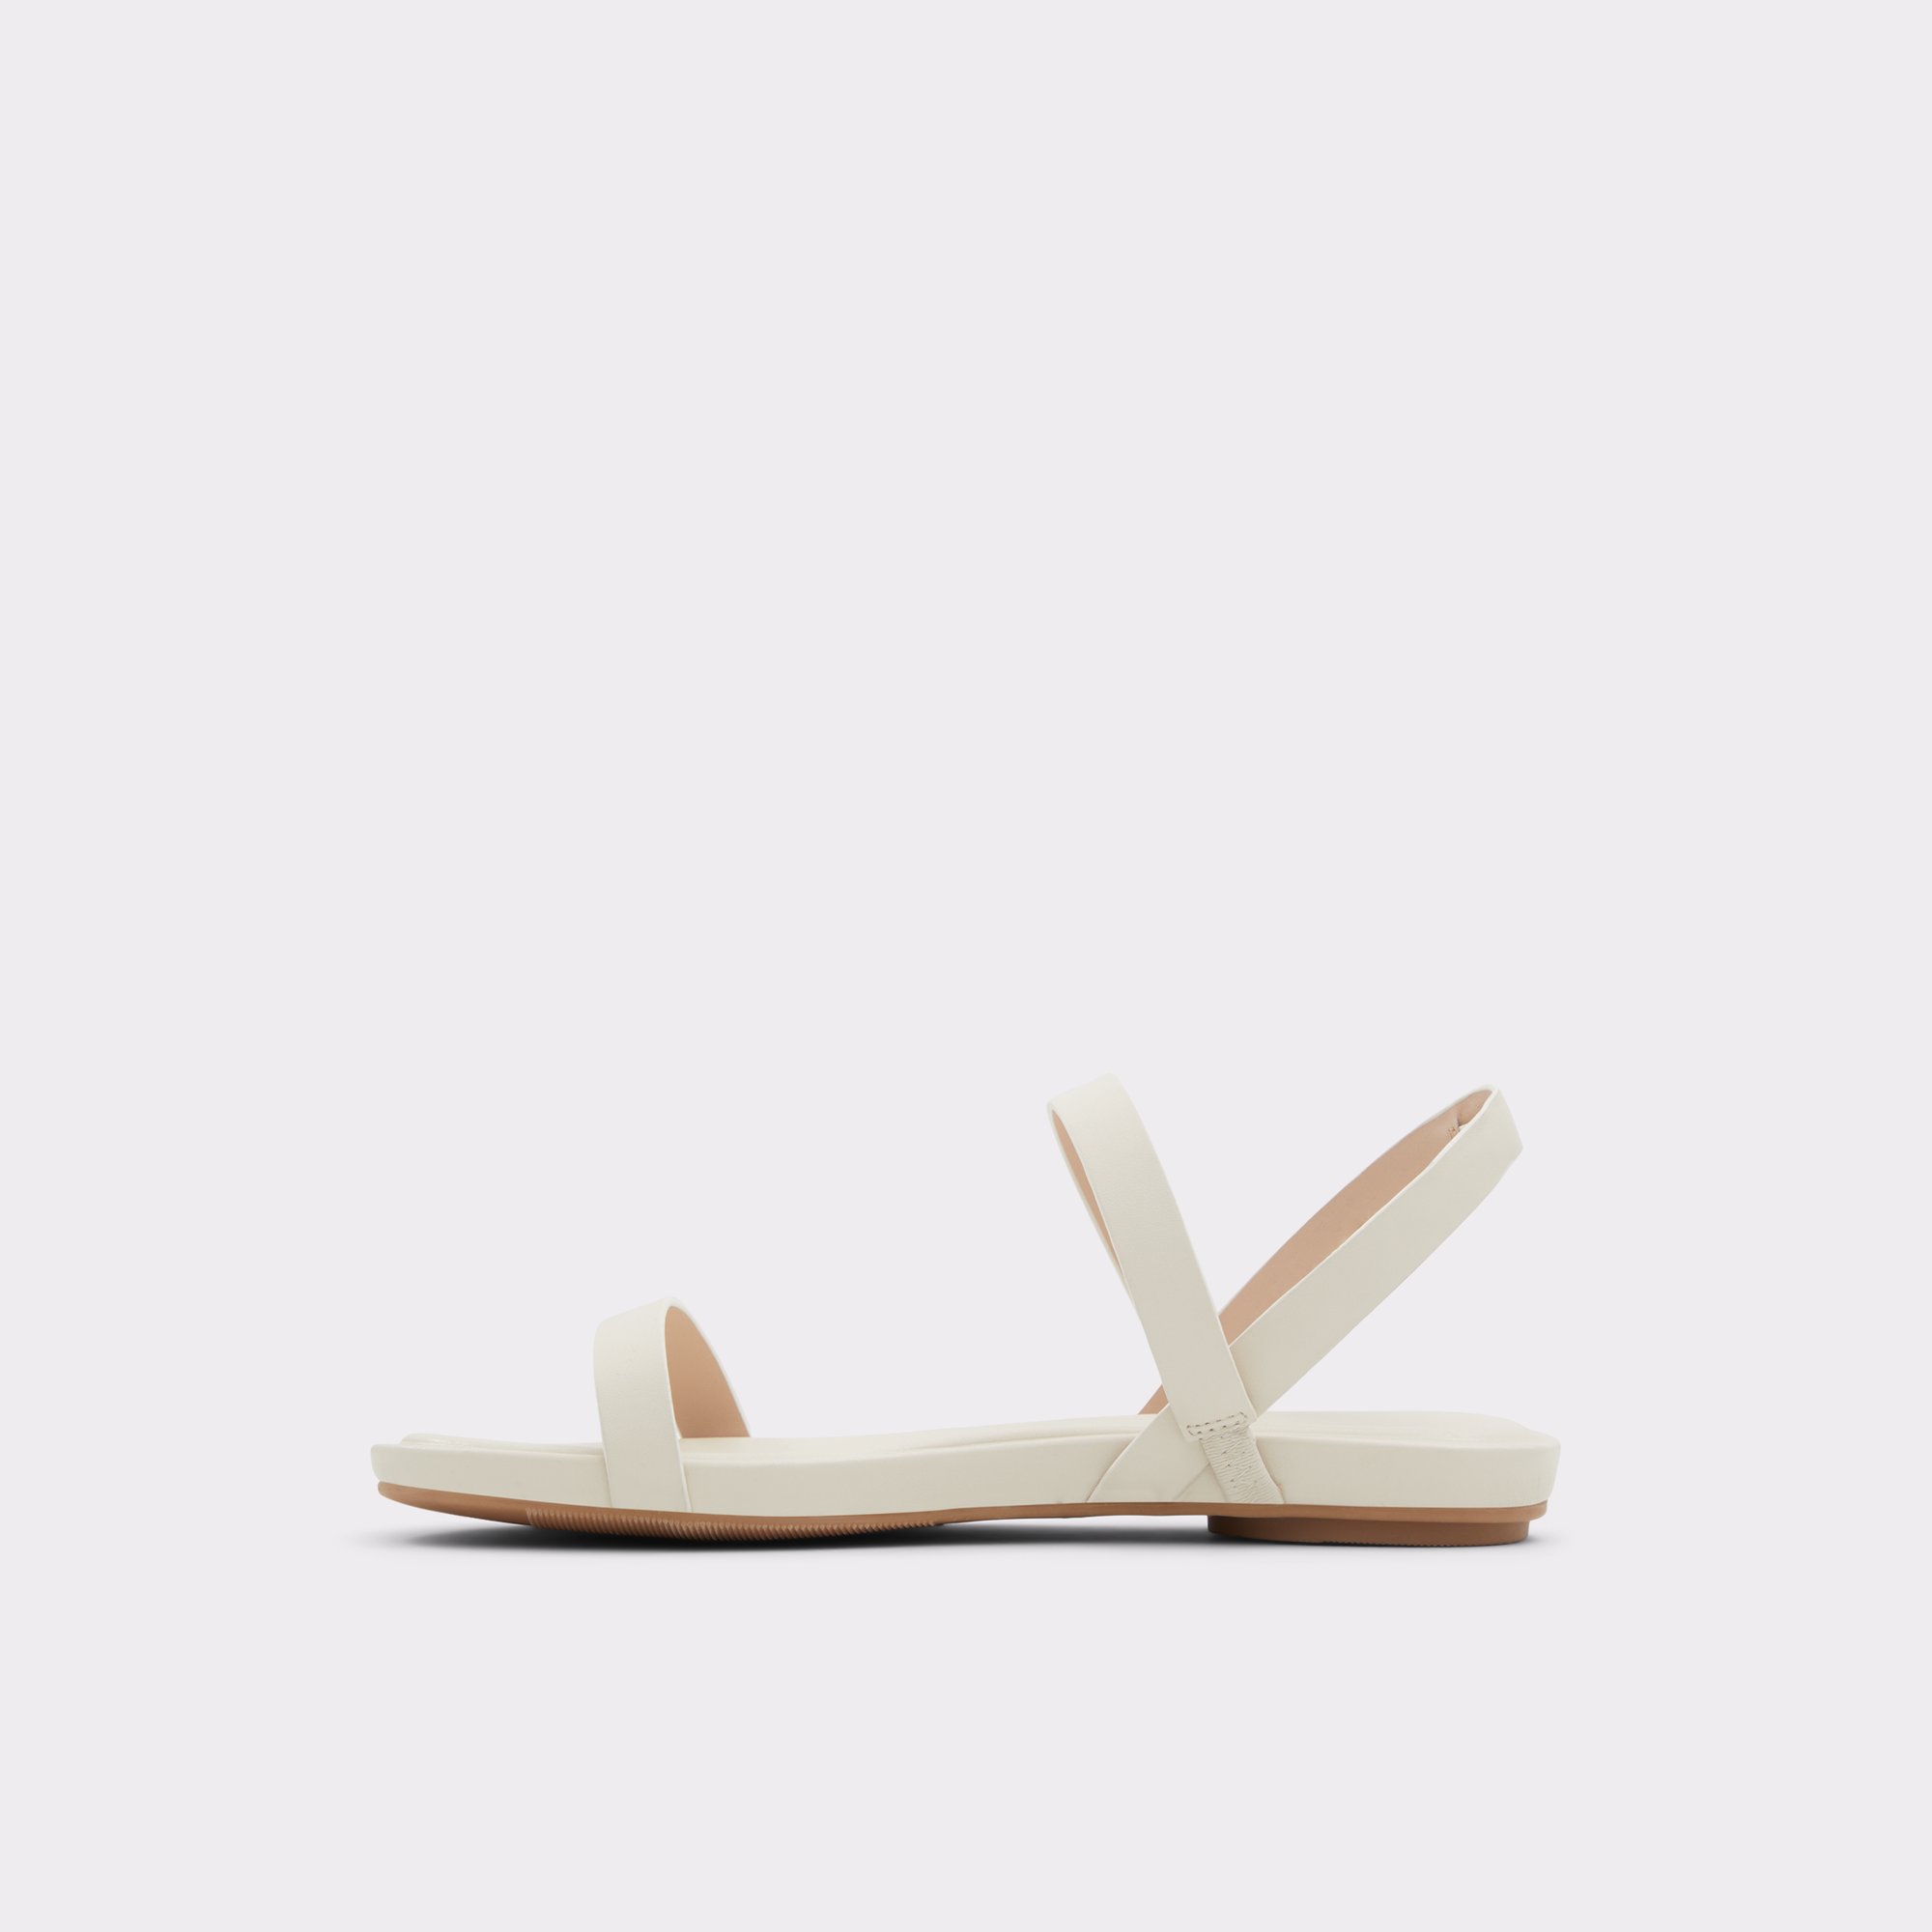 Pomawin White-Bone Women's Flat Sandals | ALDO US